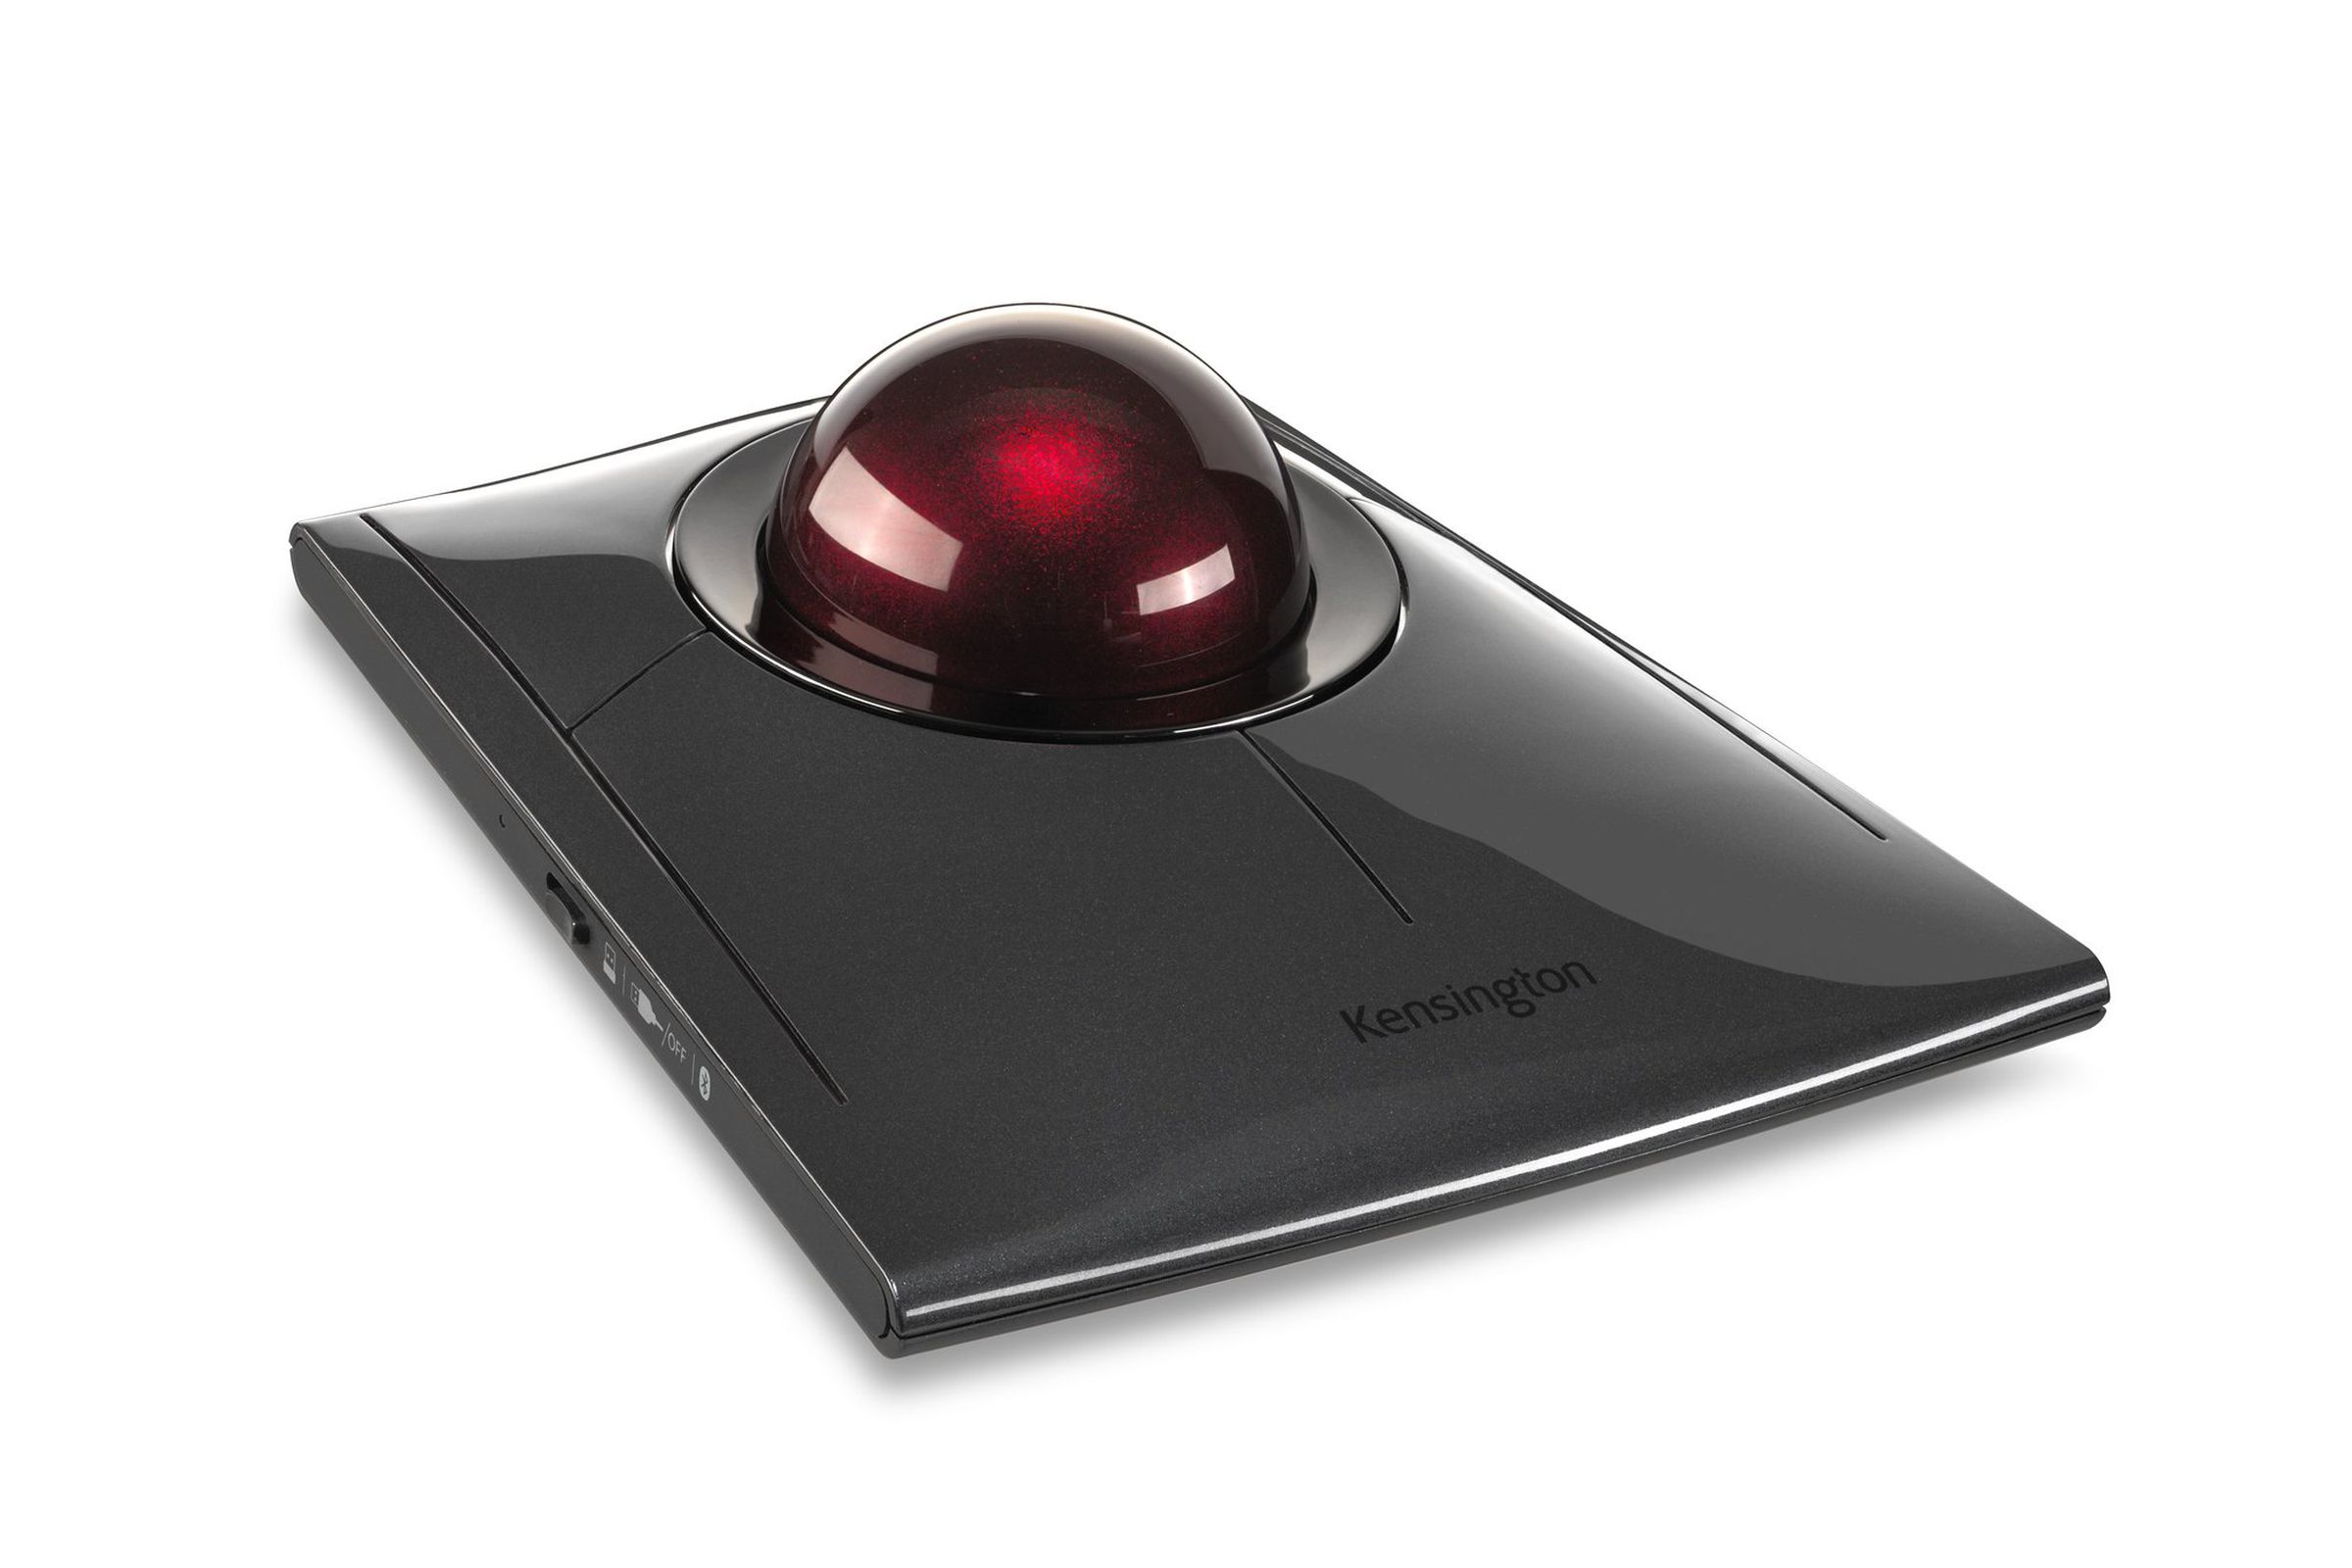 The new SlimBlade Pro trackball mouse.